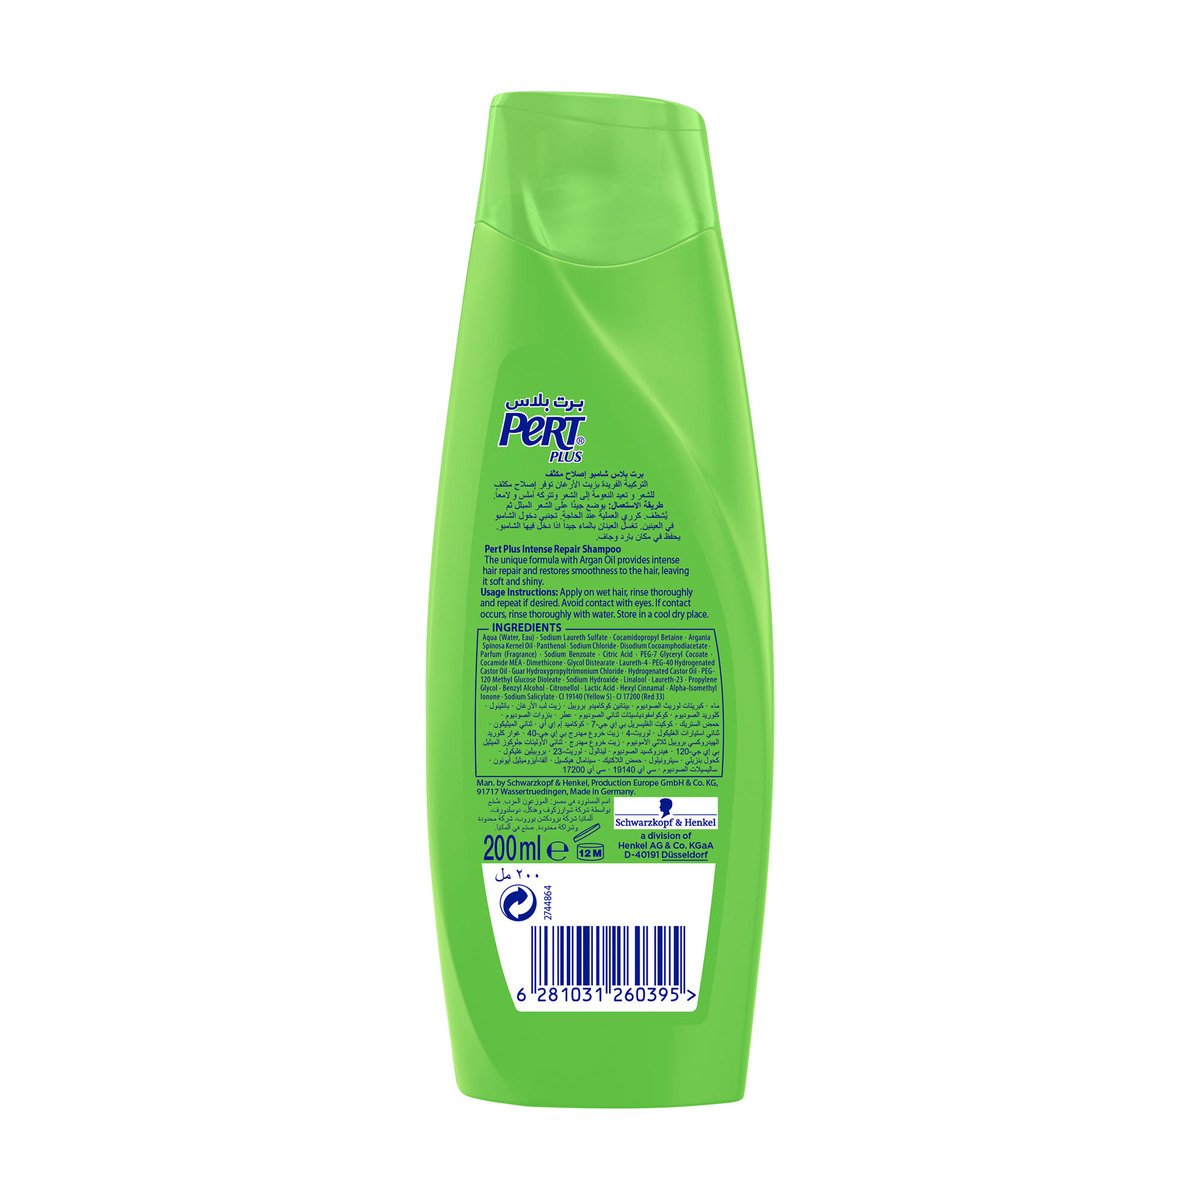 Pert Plus Intense Repair Shampoo with Argan Oil 200 ml